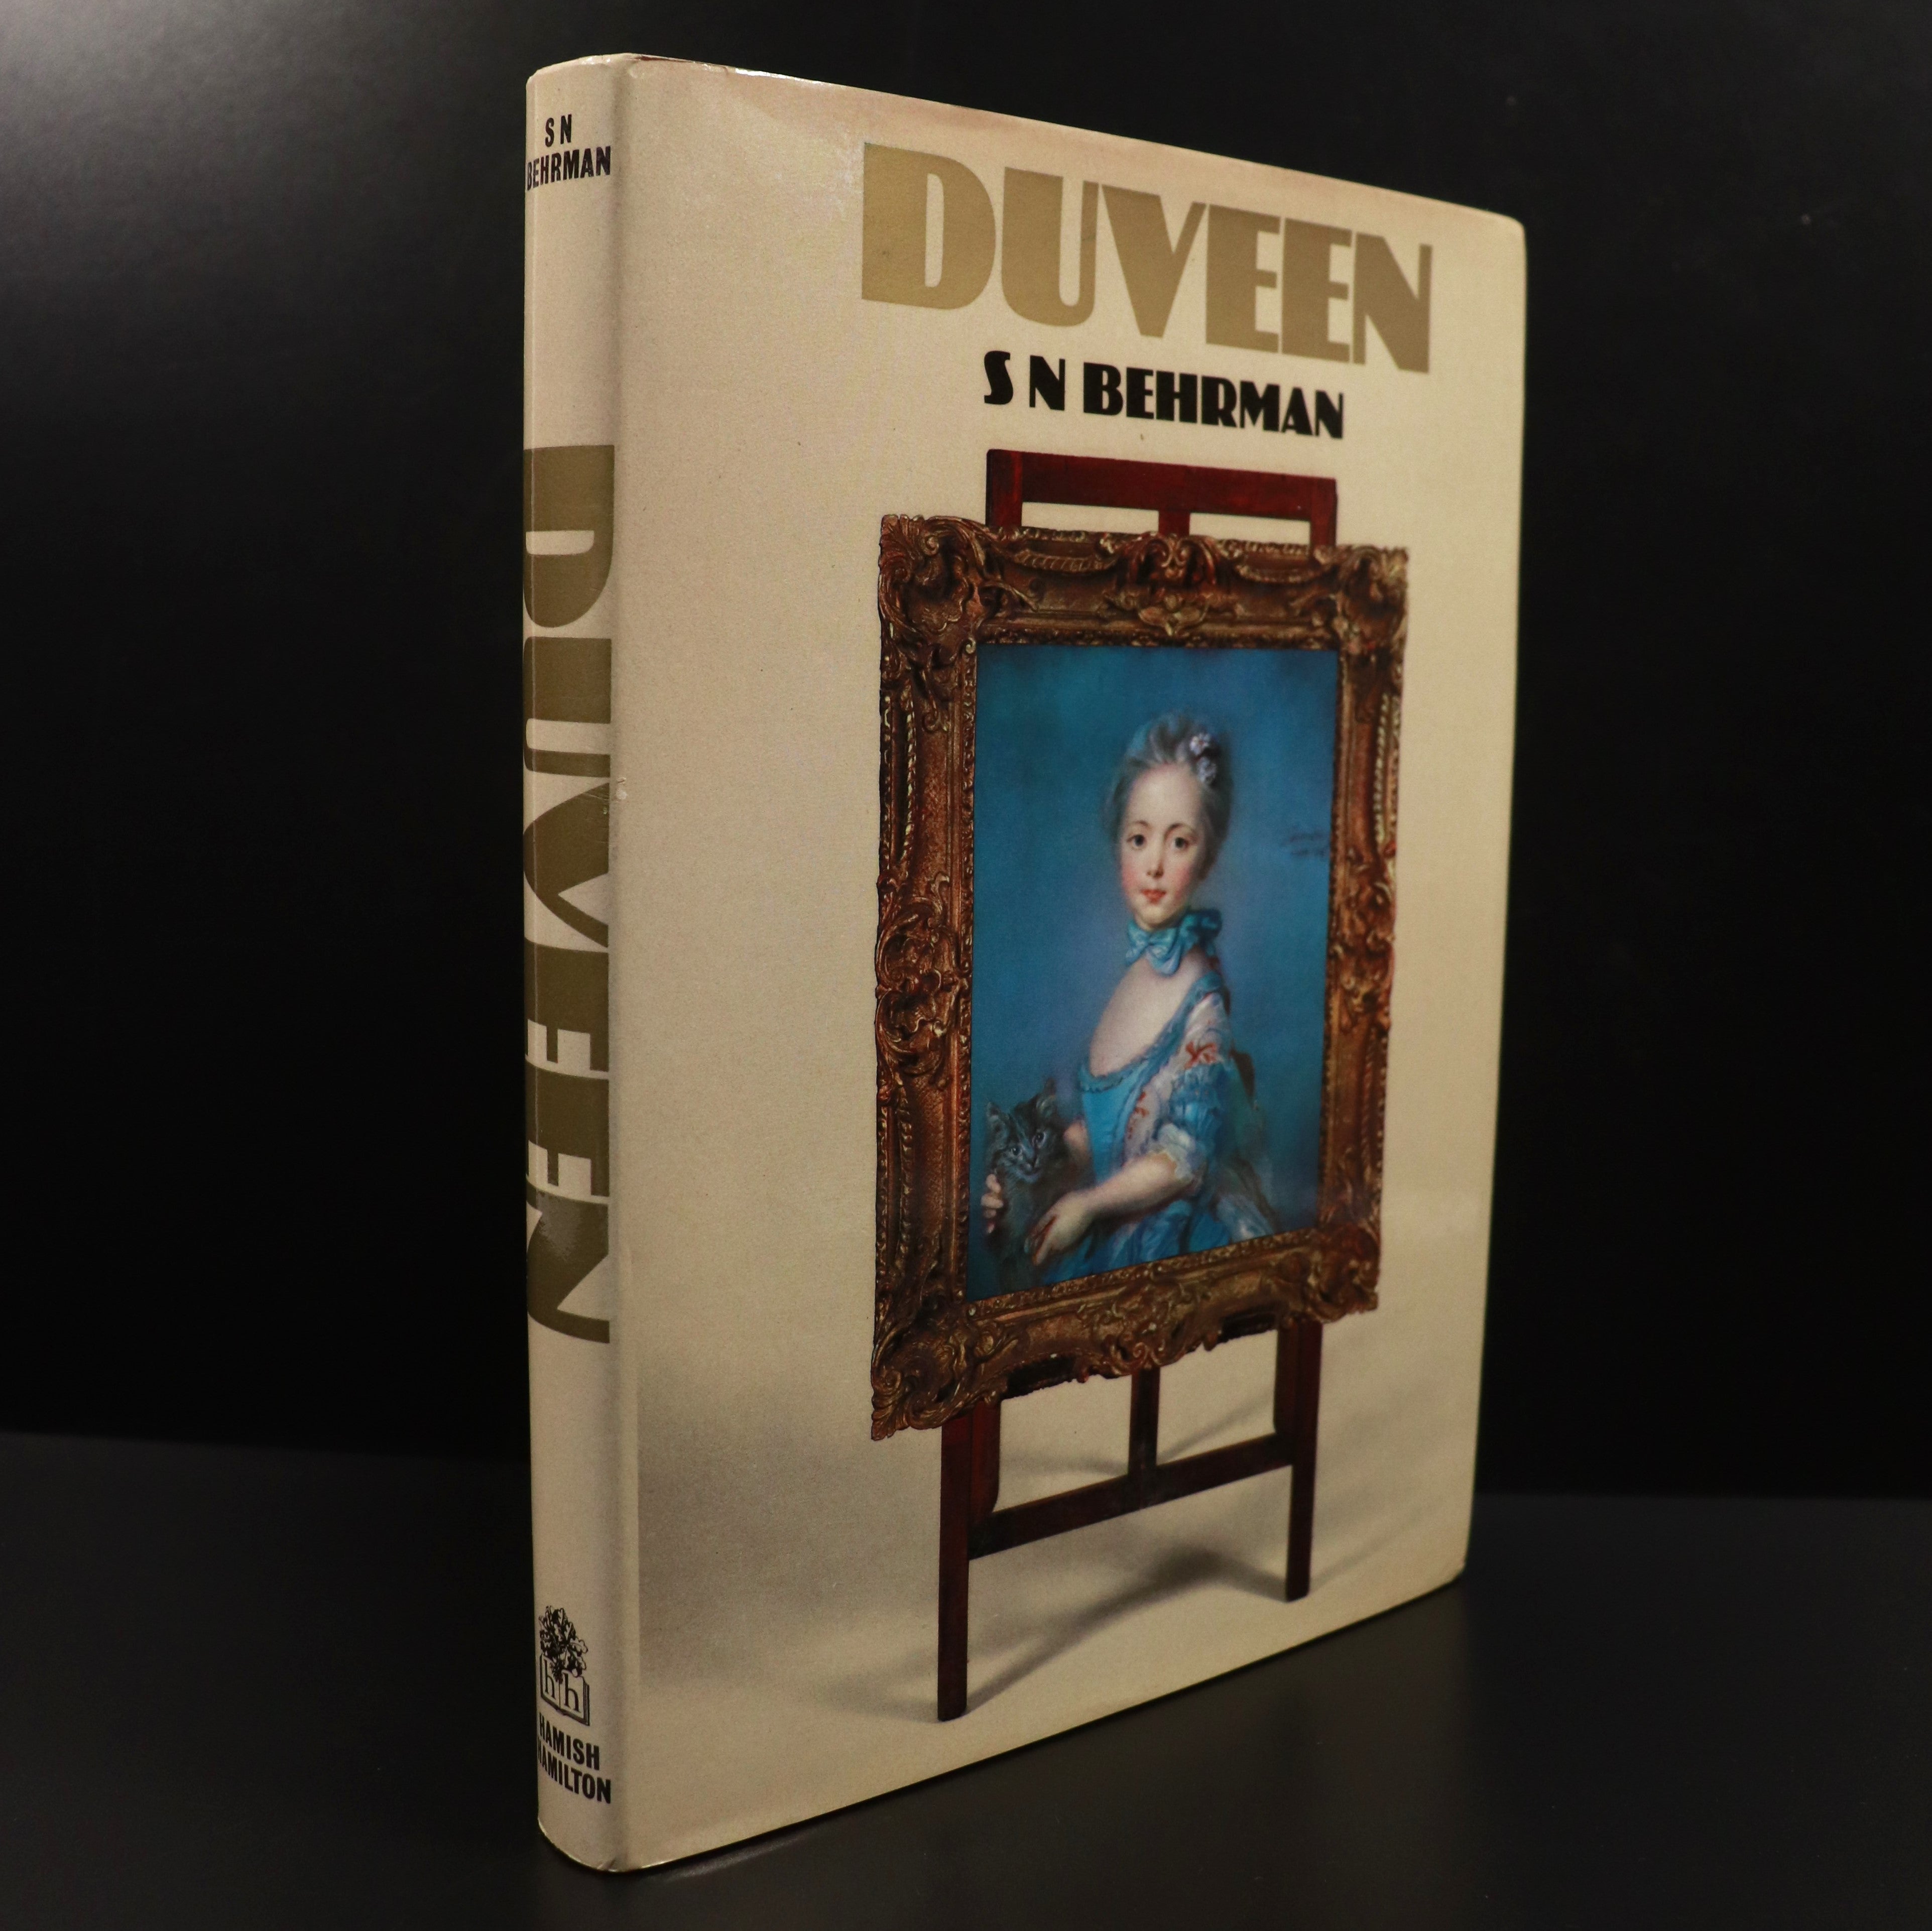 1972 Duveen by S.N. Behrman Vintage British Art Dealer History Book